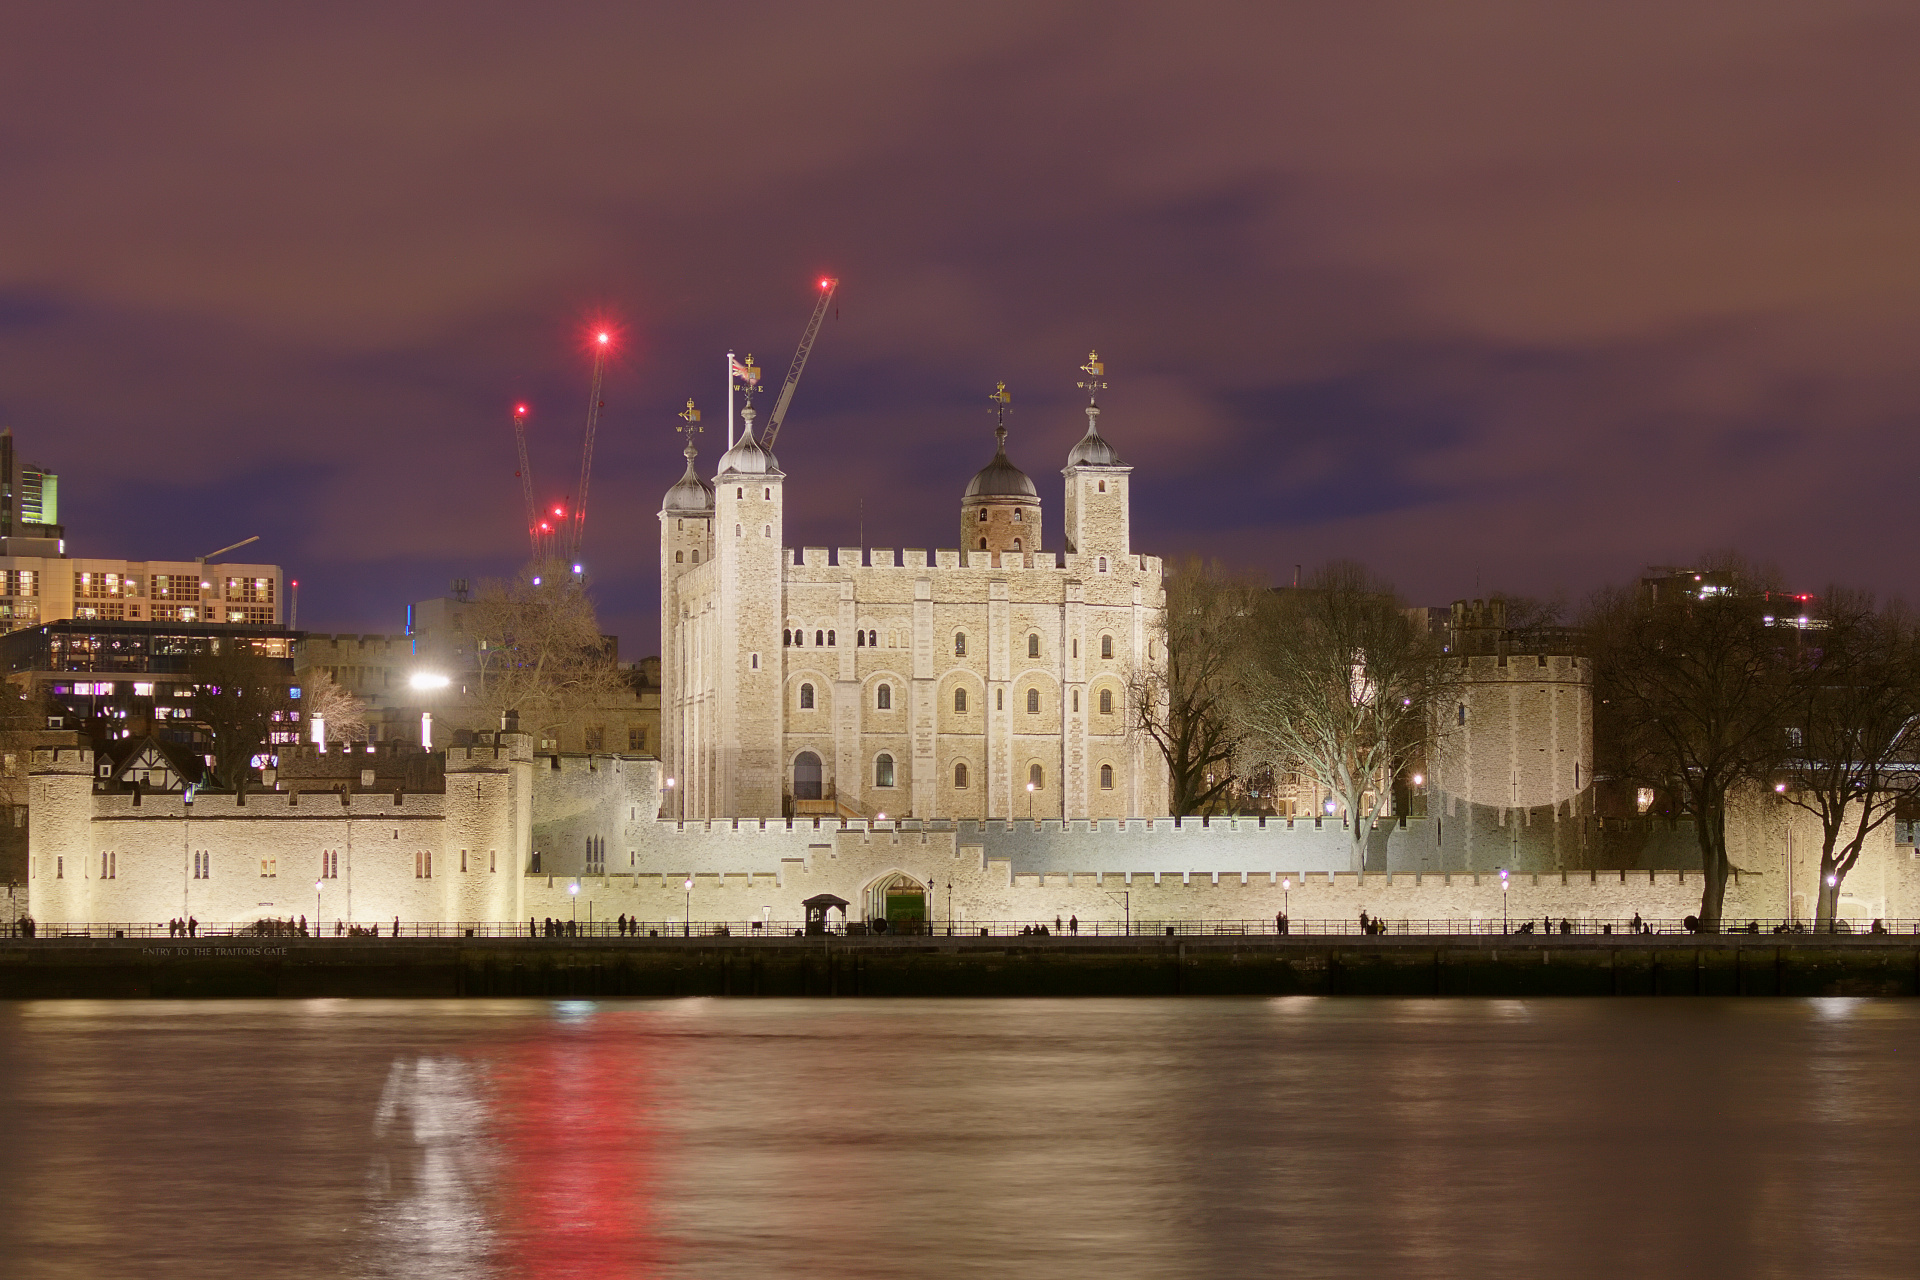 The Tower of London (Podróże » Londyn » Londyn w nocy)